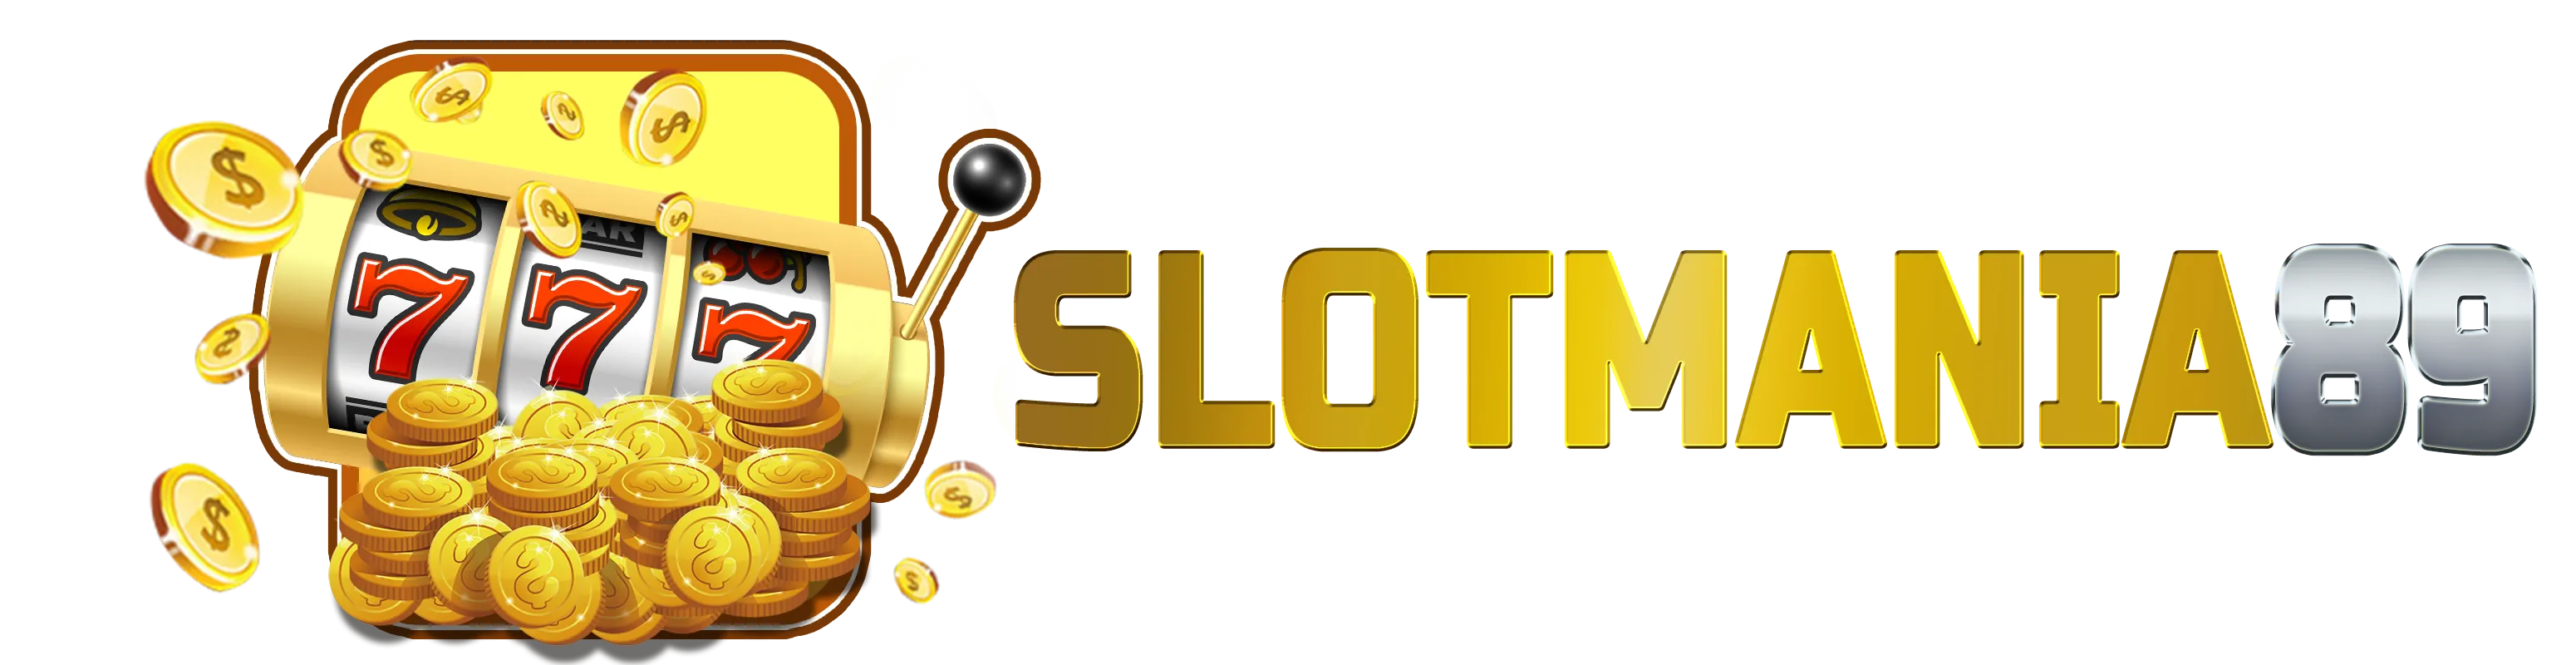 Slotmania89